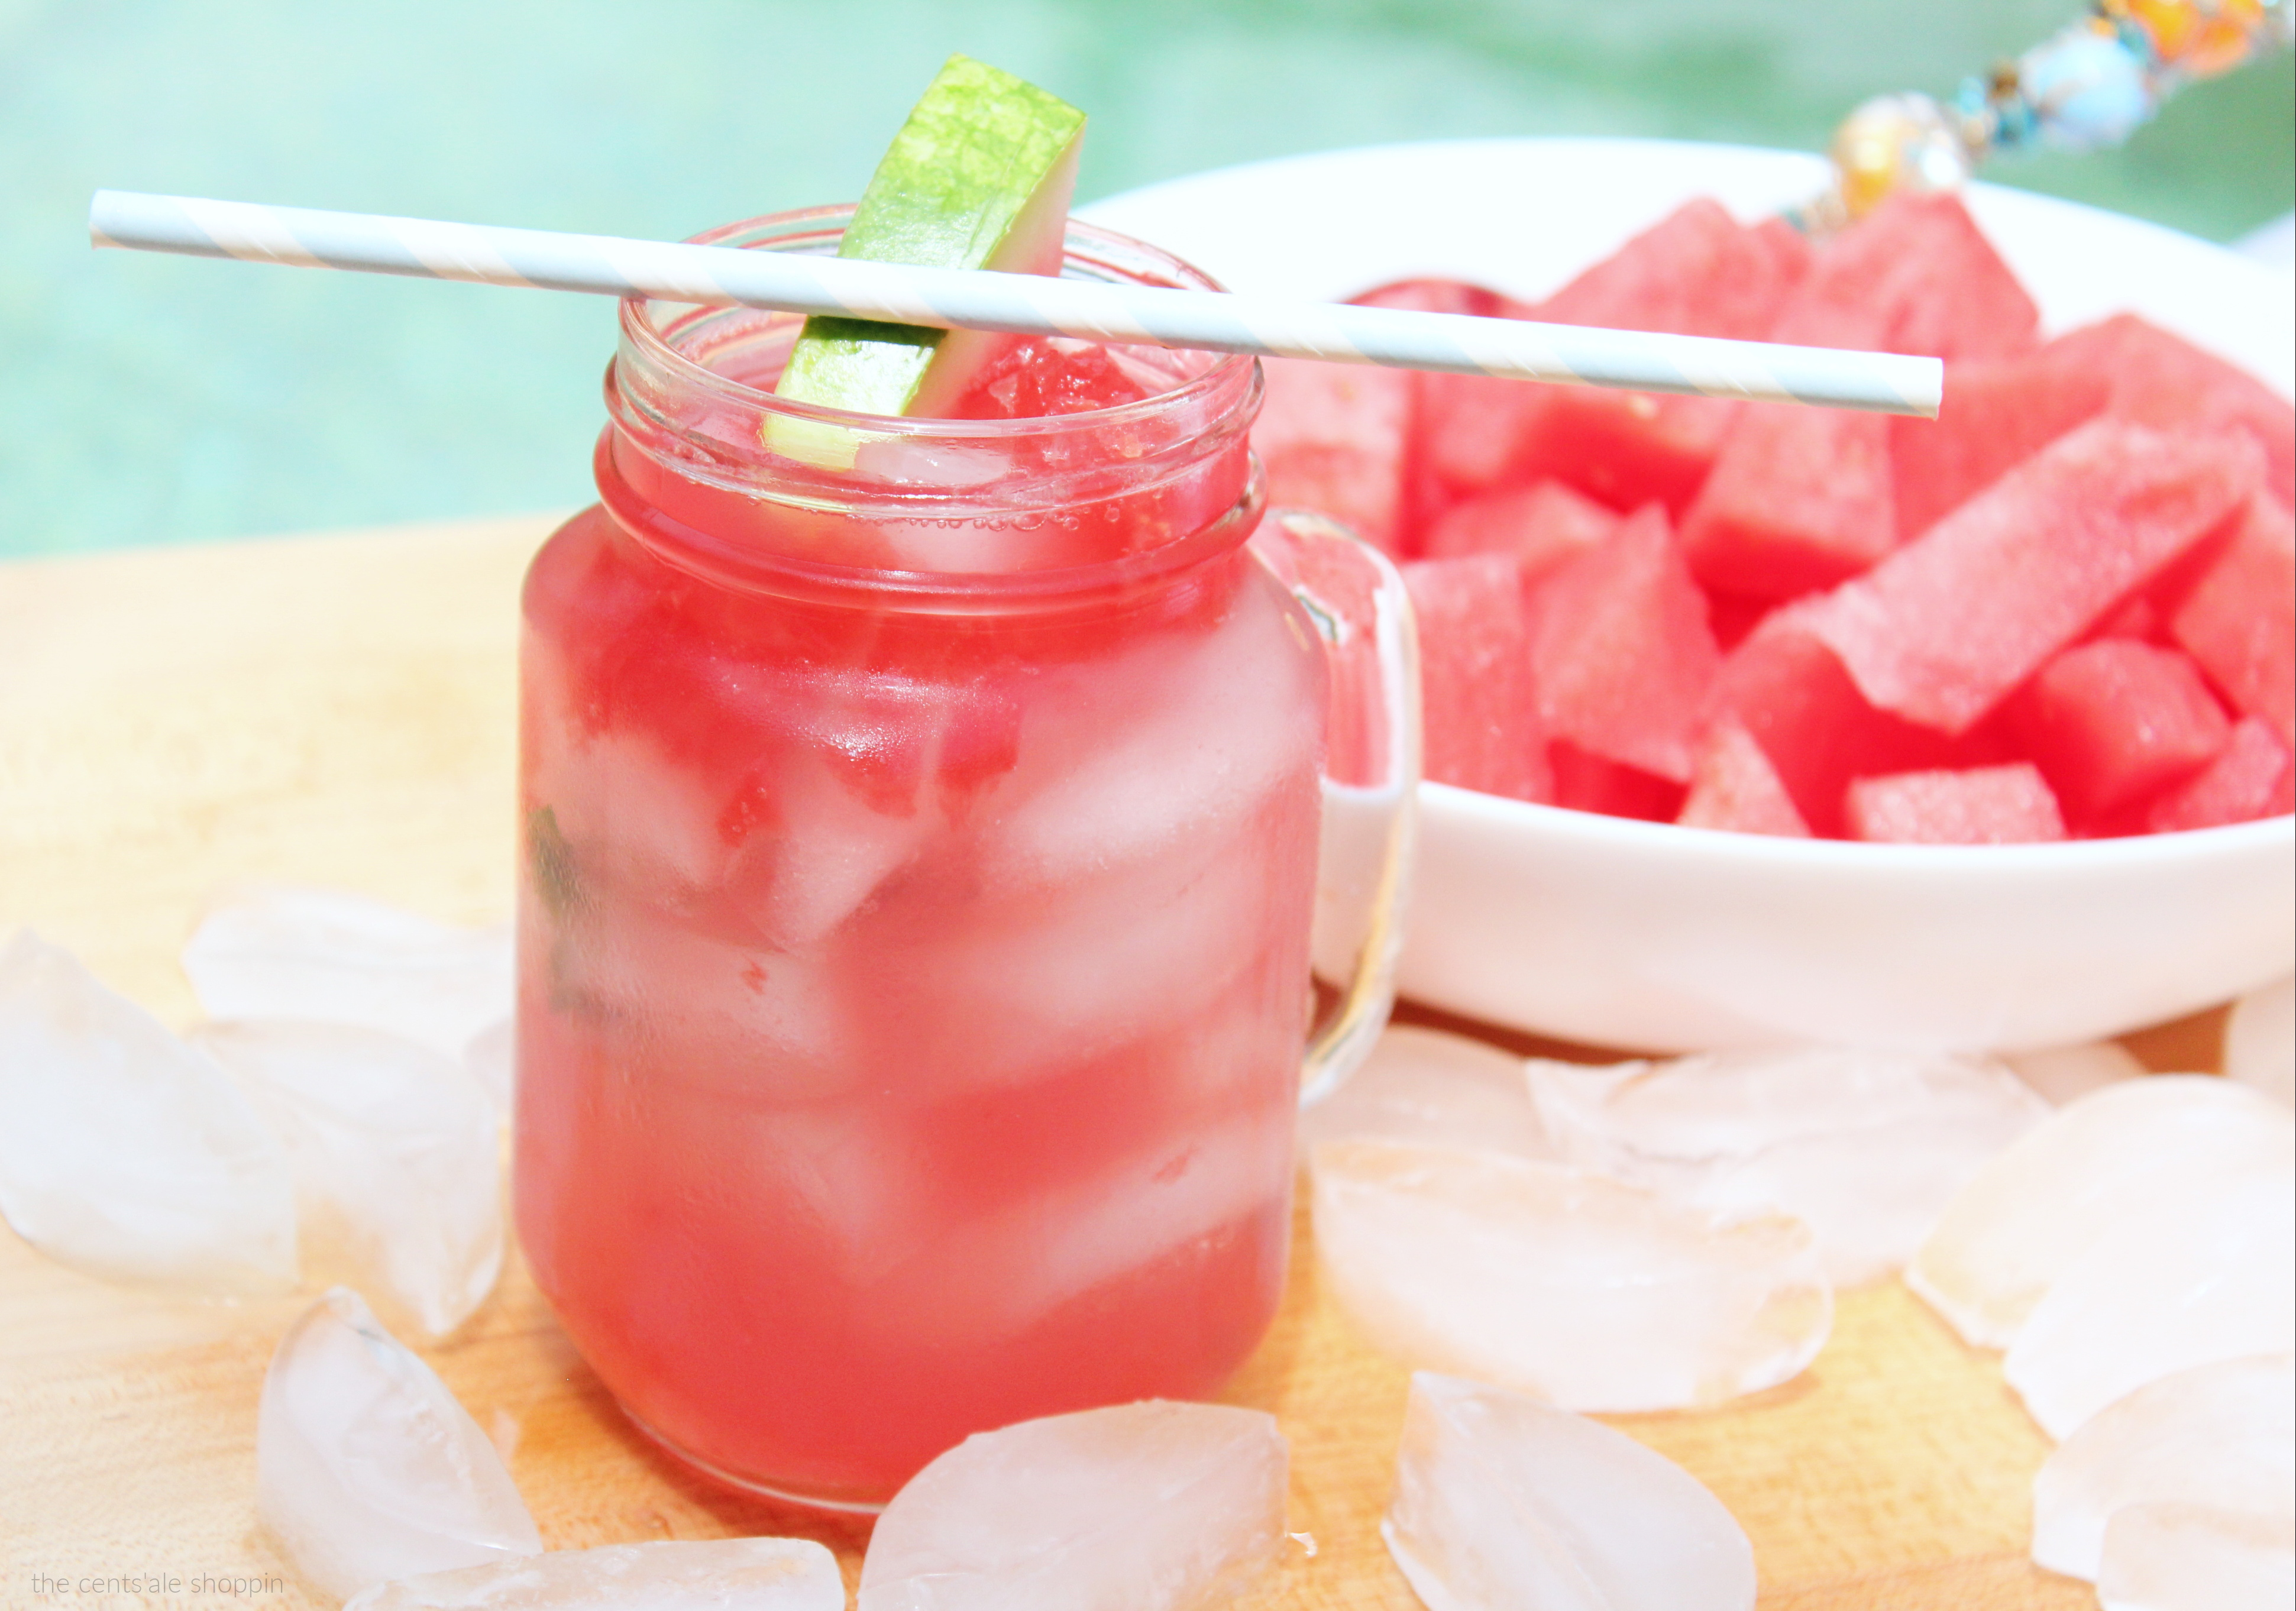 Watermelon Mint Cocktail